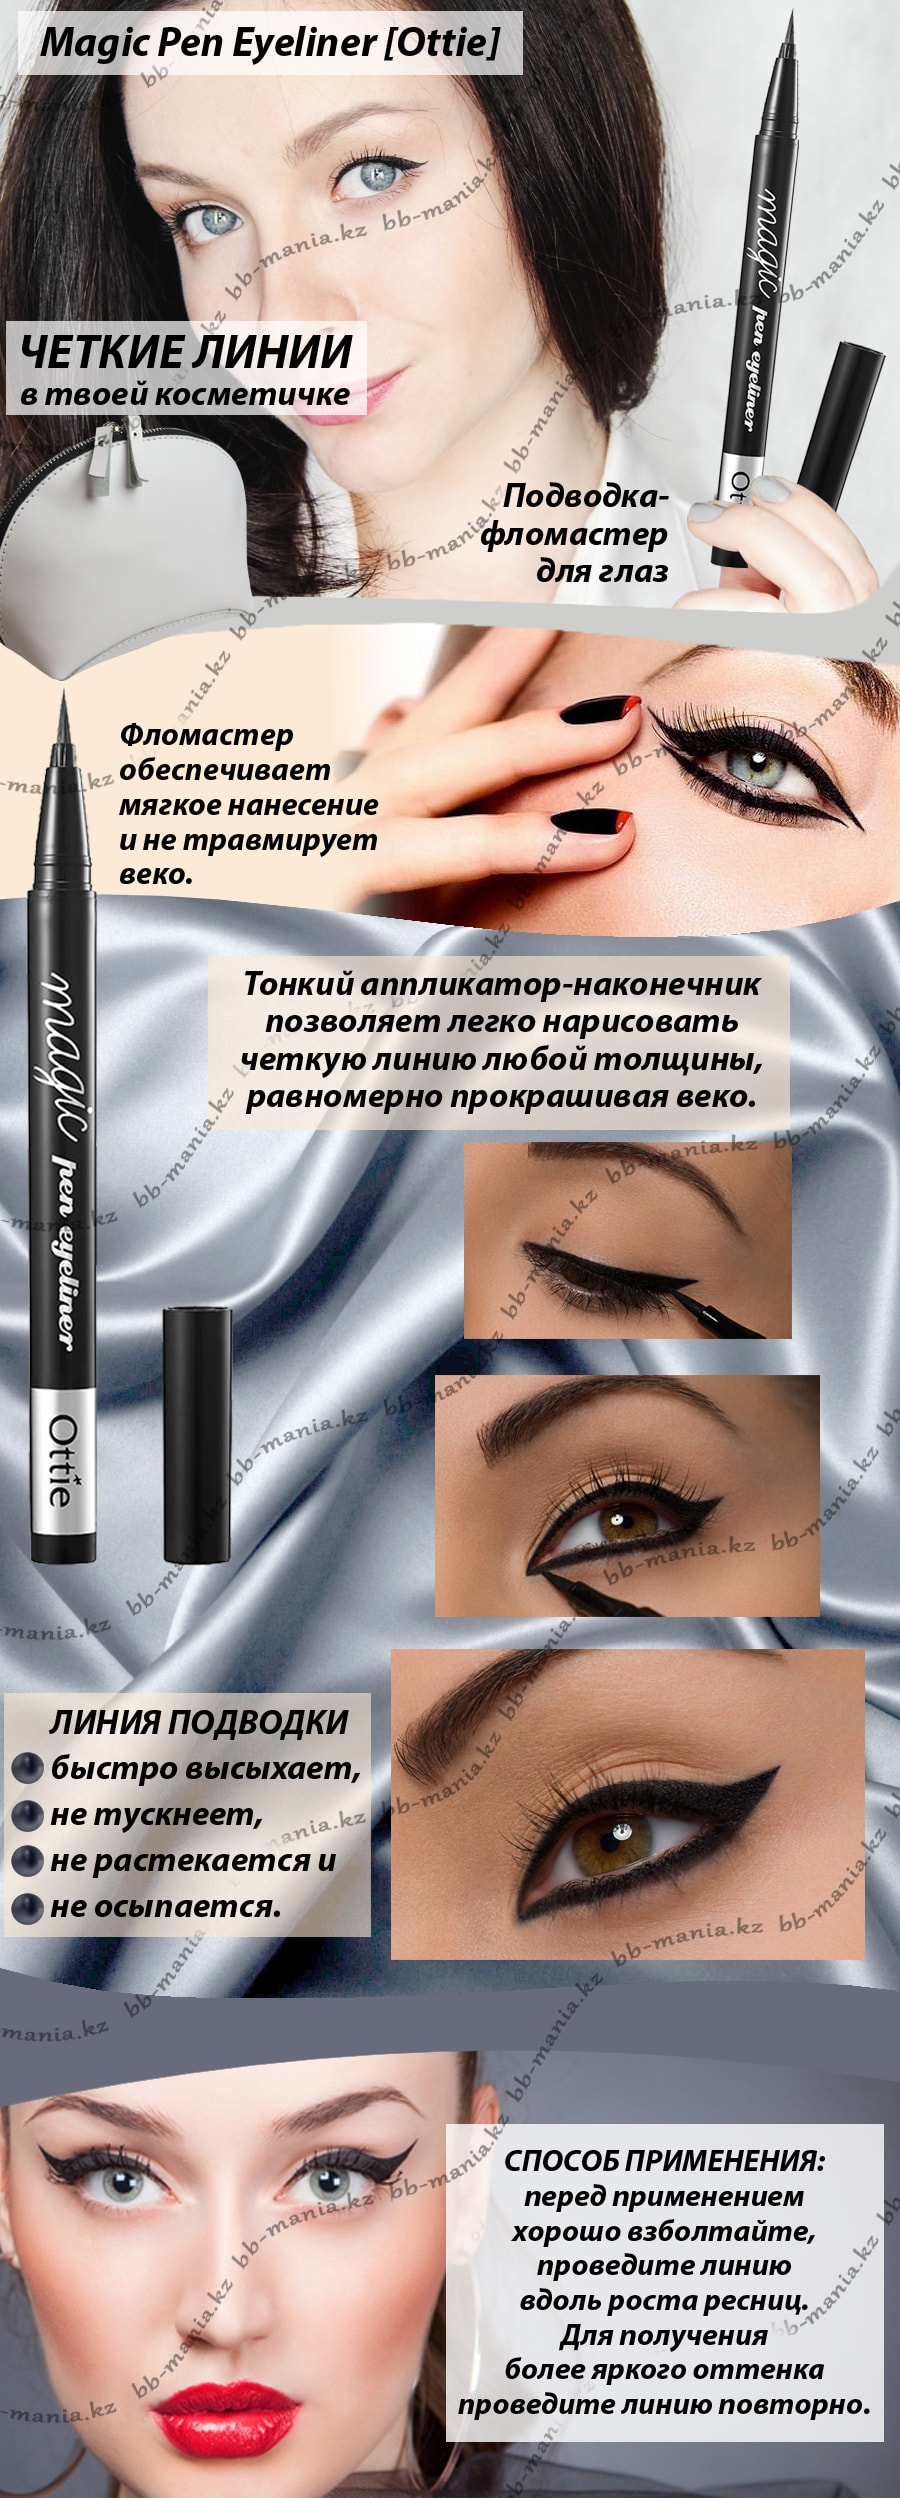 Magic-Pen-Eyeliner-[Ottie]-bbmania-min